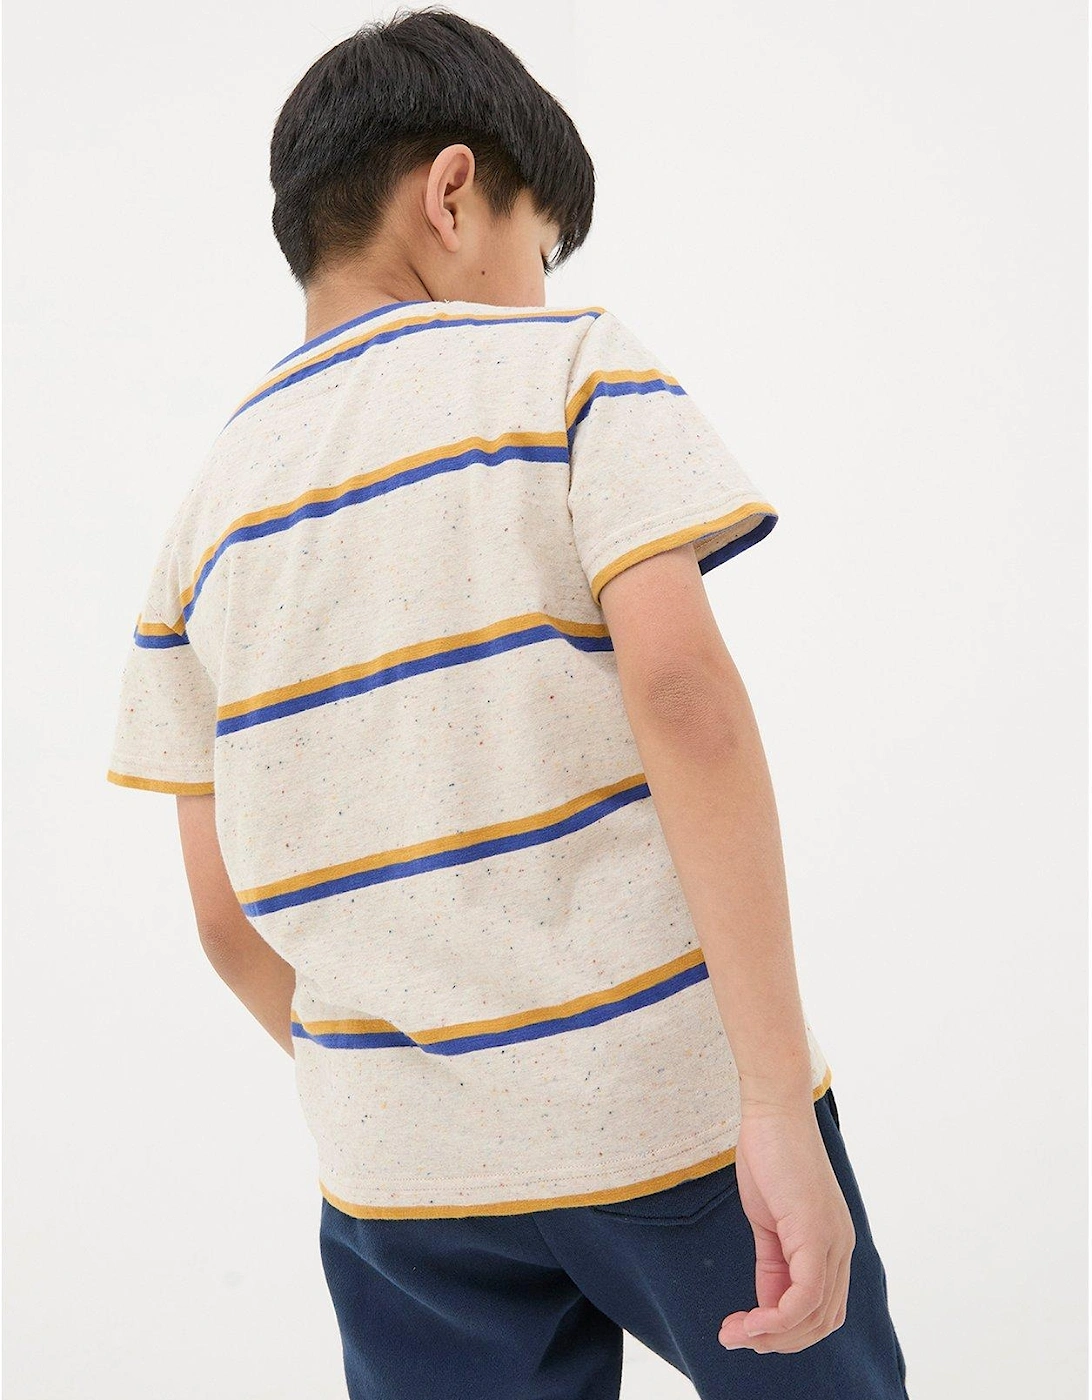 Boys 3 Pack Short Sleeve T Shirts - Golden Yellow